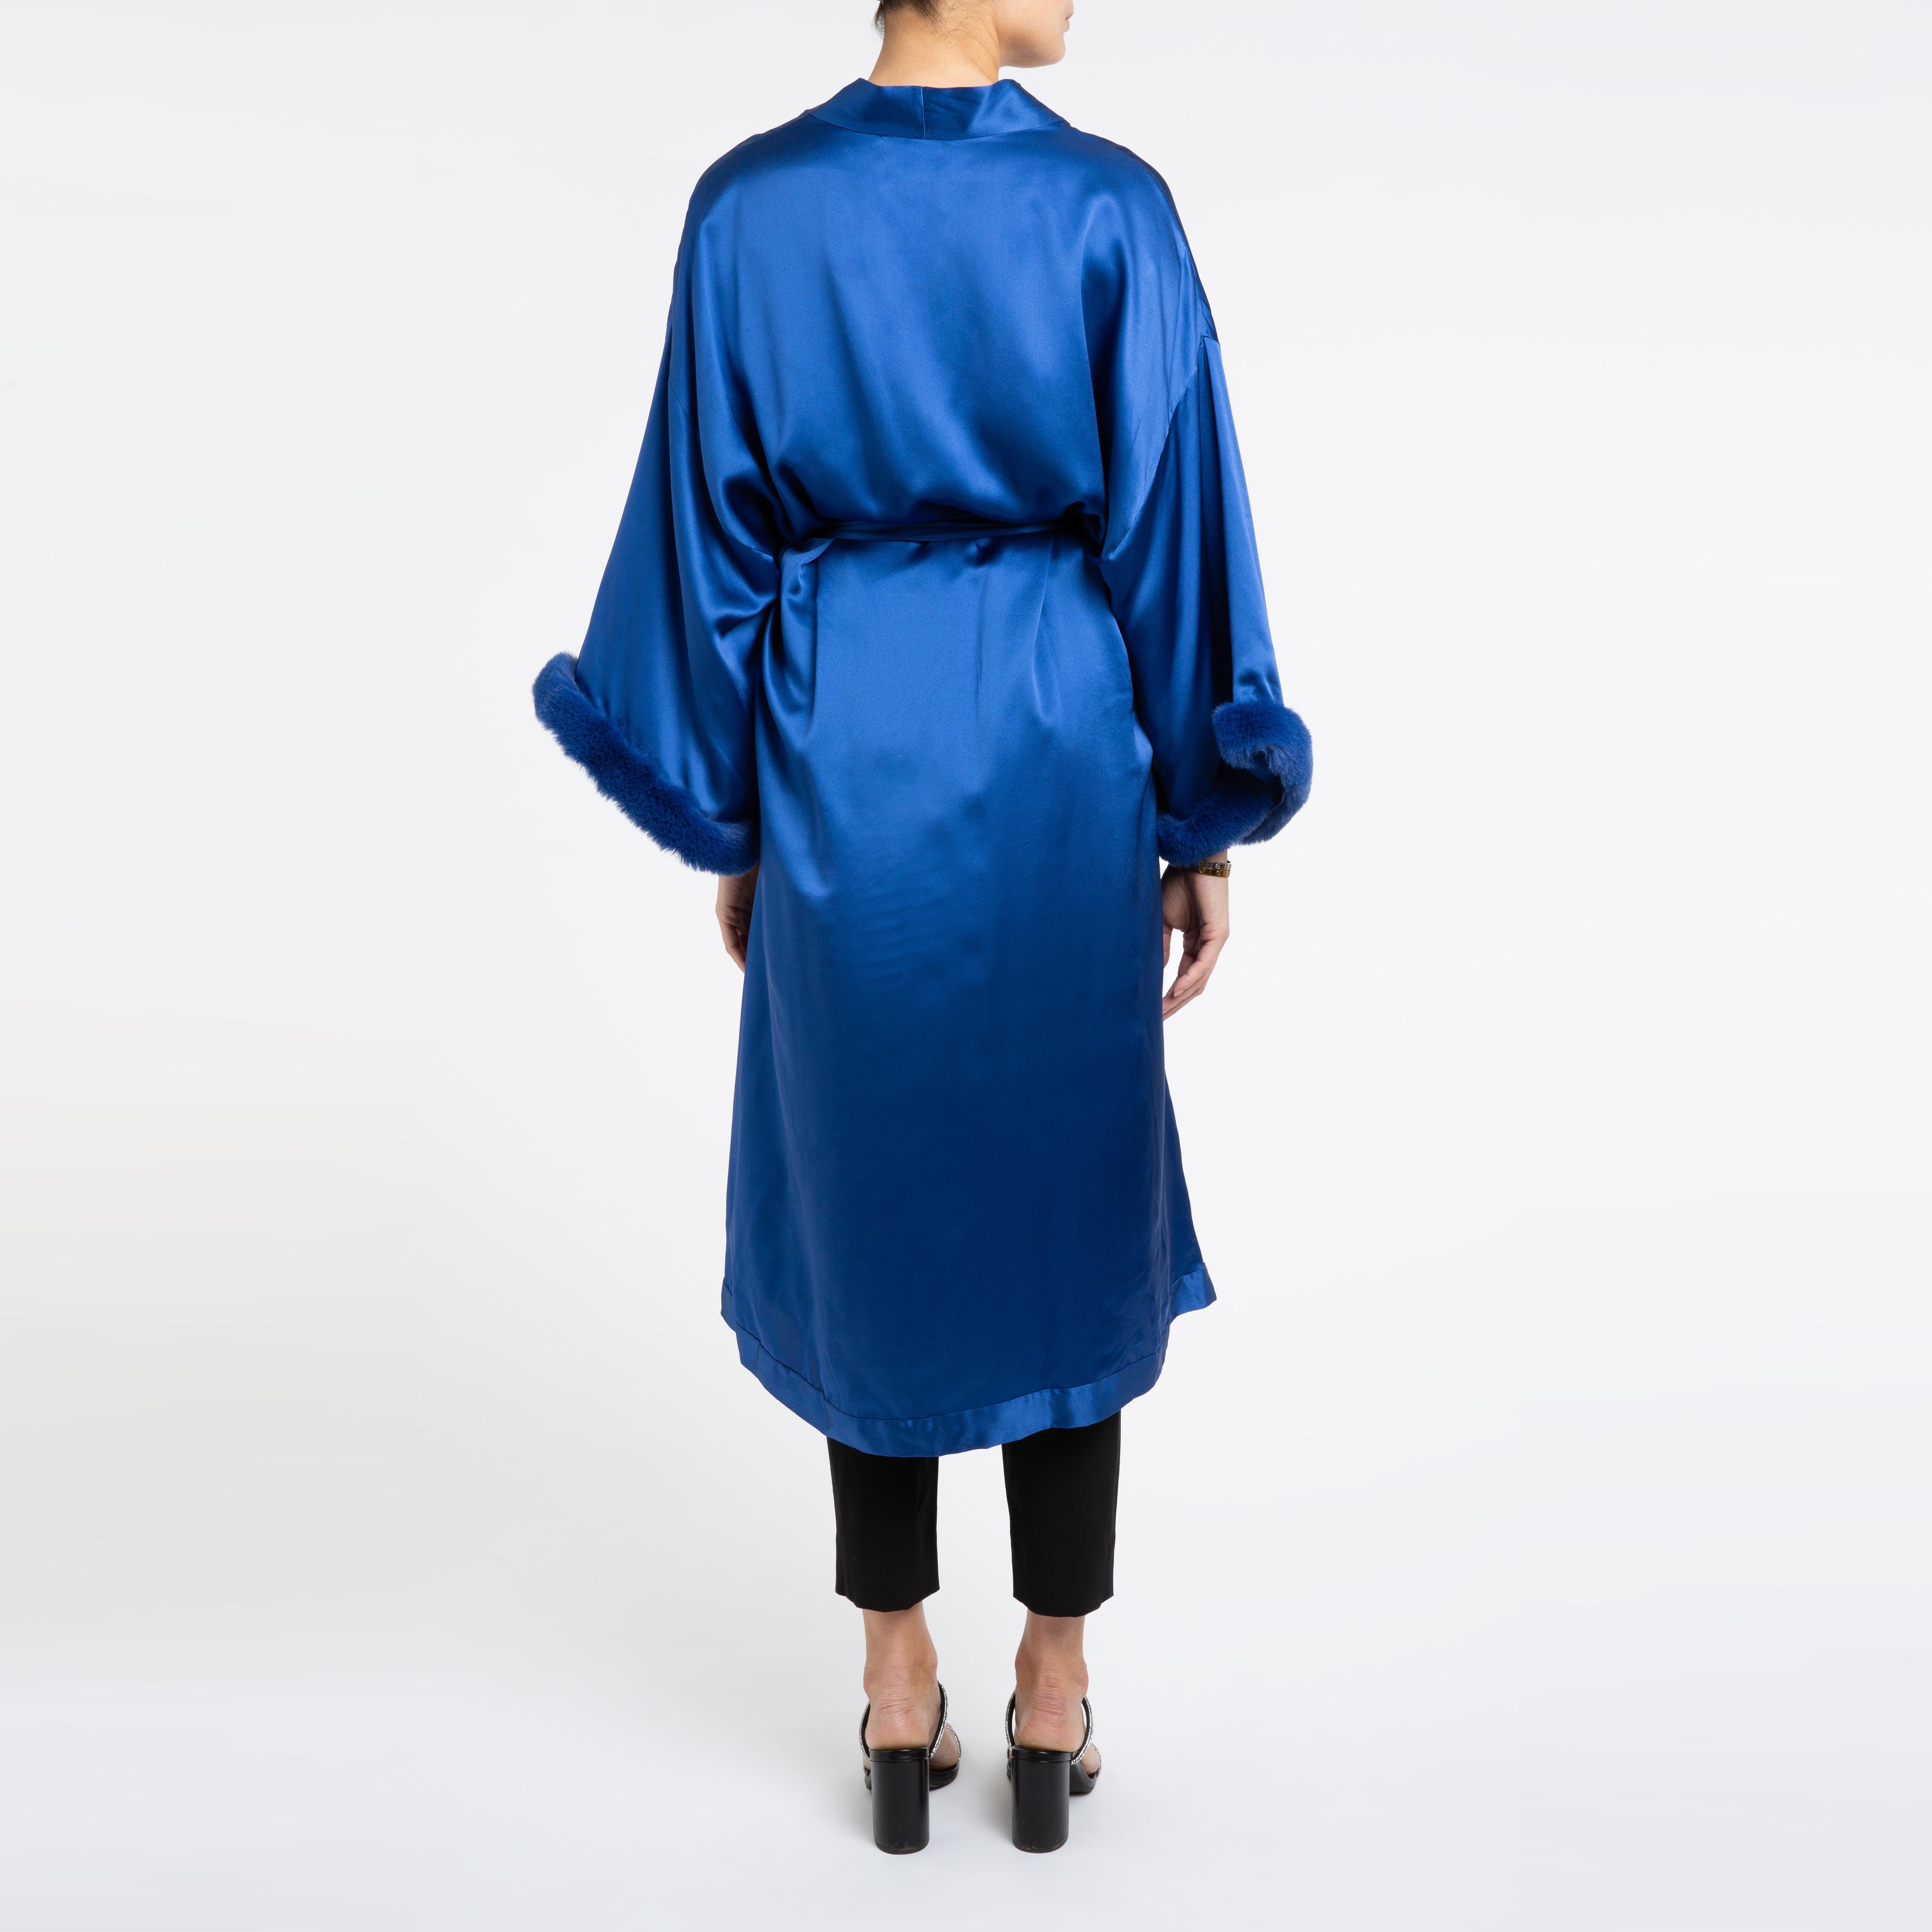 Verheyen London Blue Kimono in Italian Silk Satin with Faux Fur - Small-medium  For Sale 2